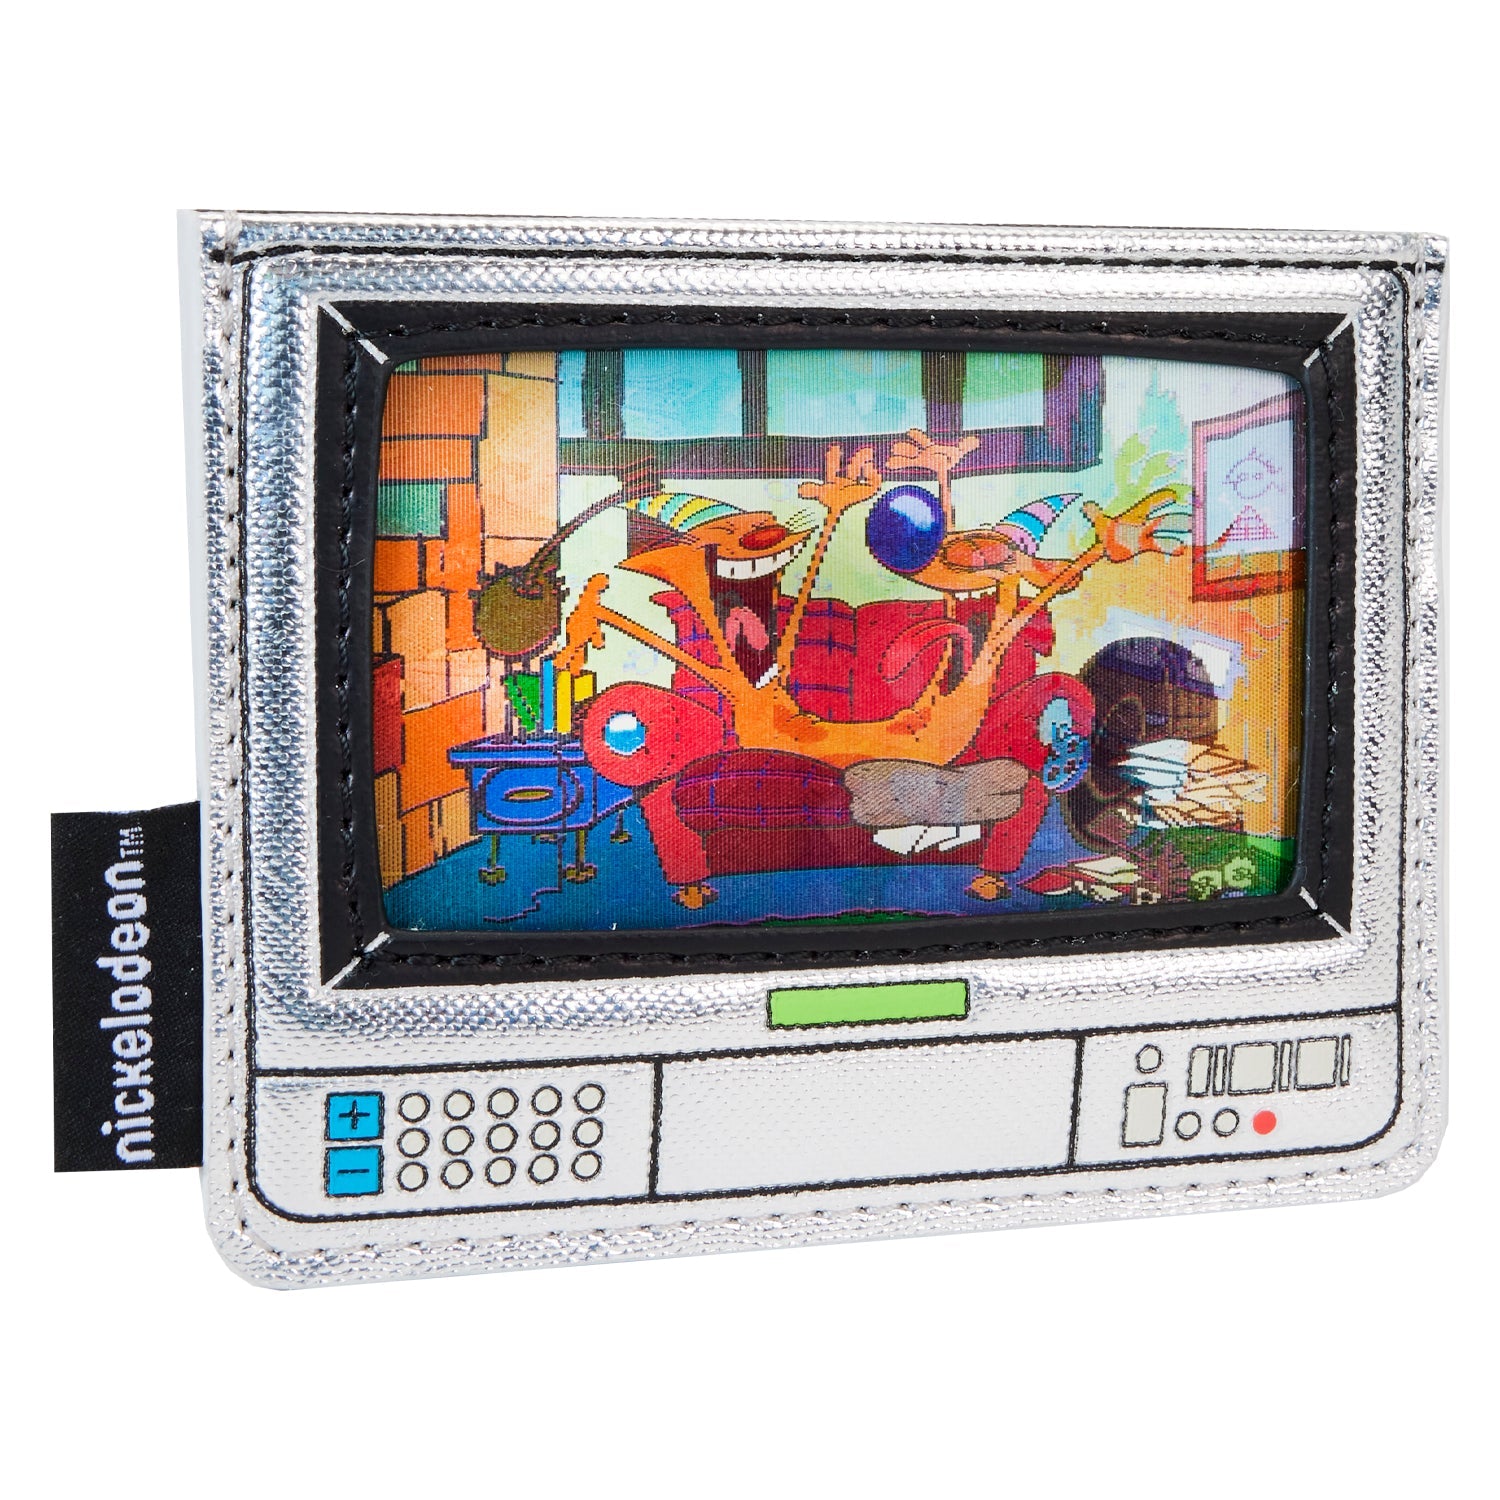 Loungefly x Nickelodeon Retro TV Cardholder - GeekCore